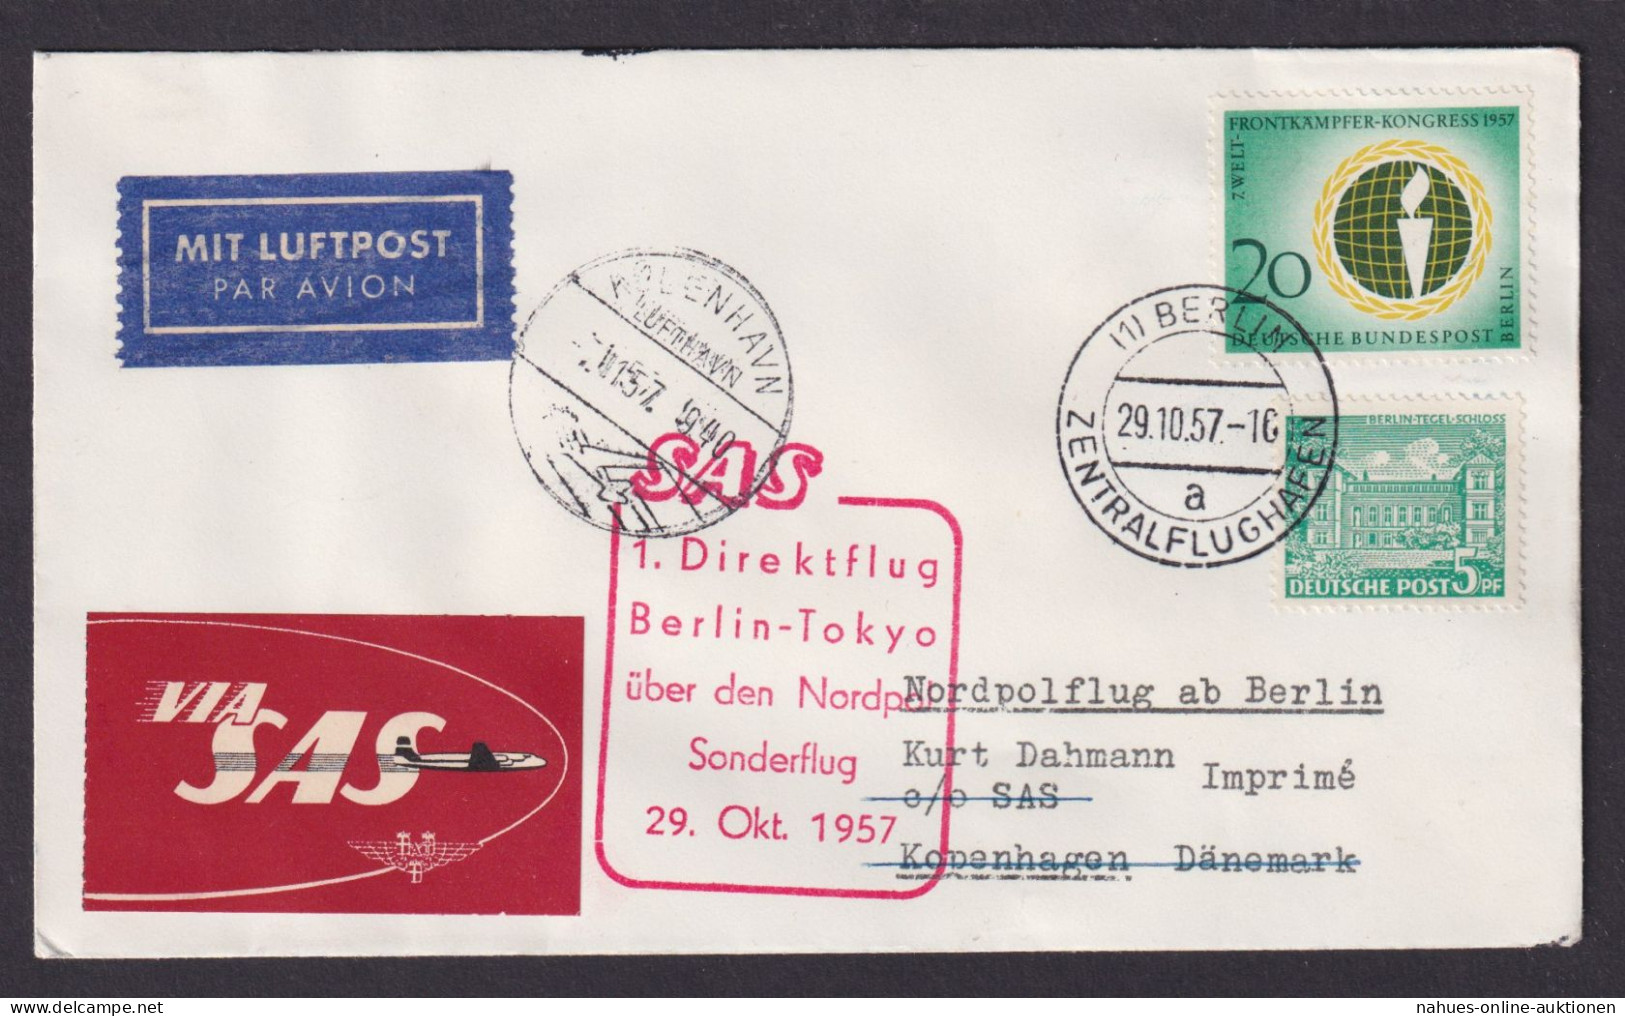 Flugpost Brief Air Mail SAS Direktflug Berlin Tokio Japan Nordpol Sonderflug - Covers & Documents